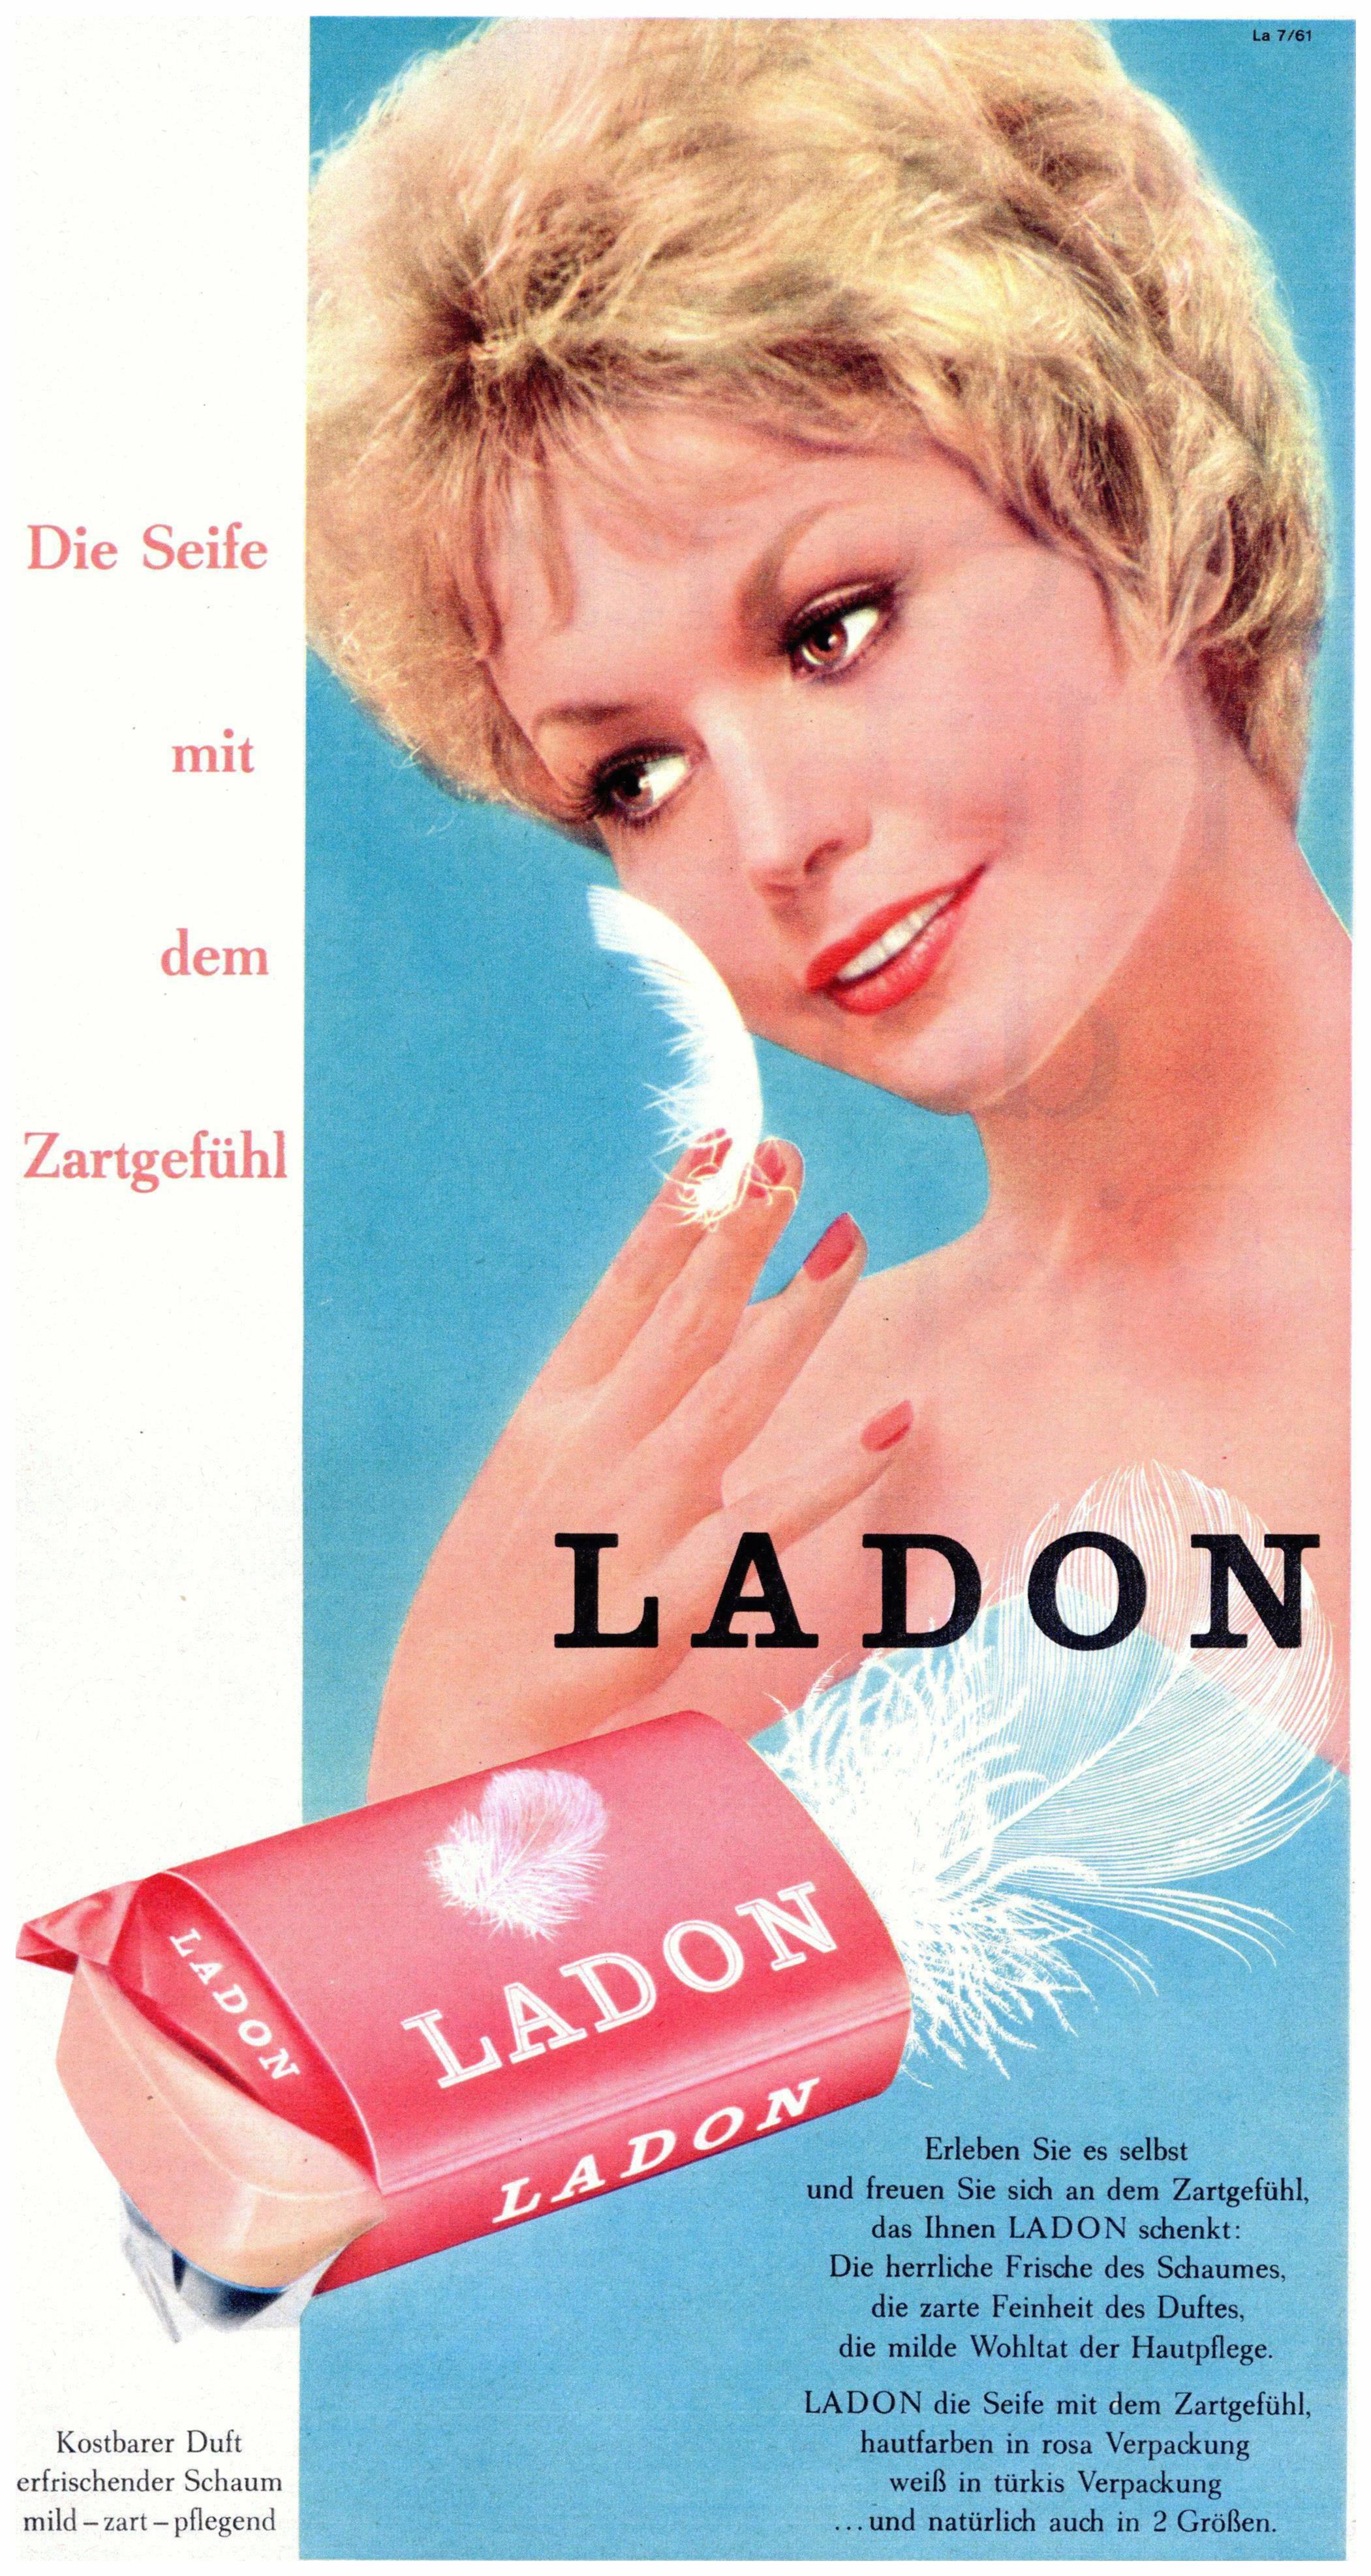 Landon 1962 0.jpg